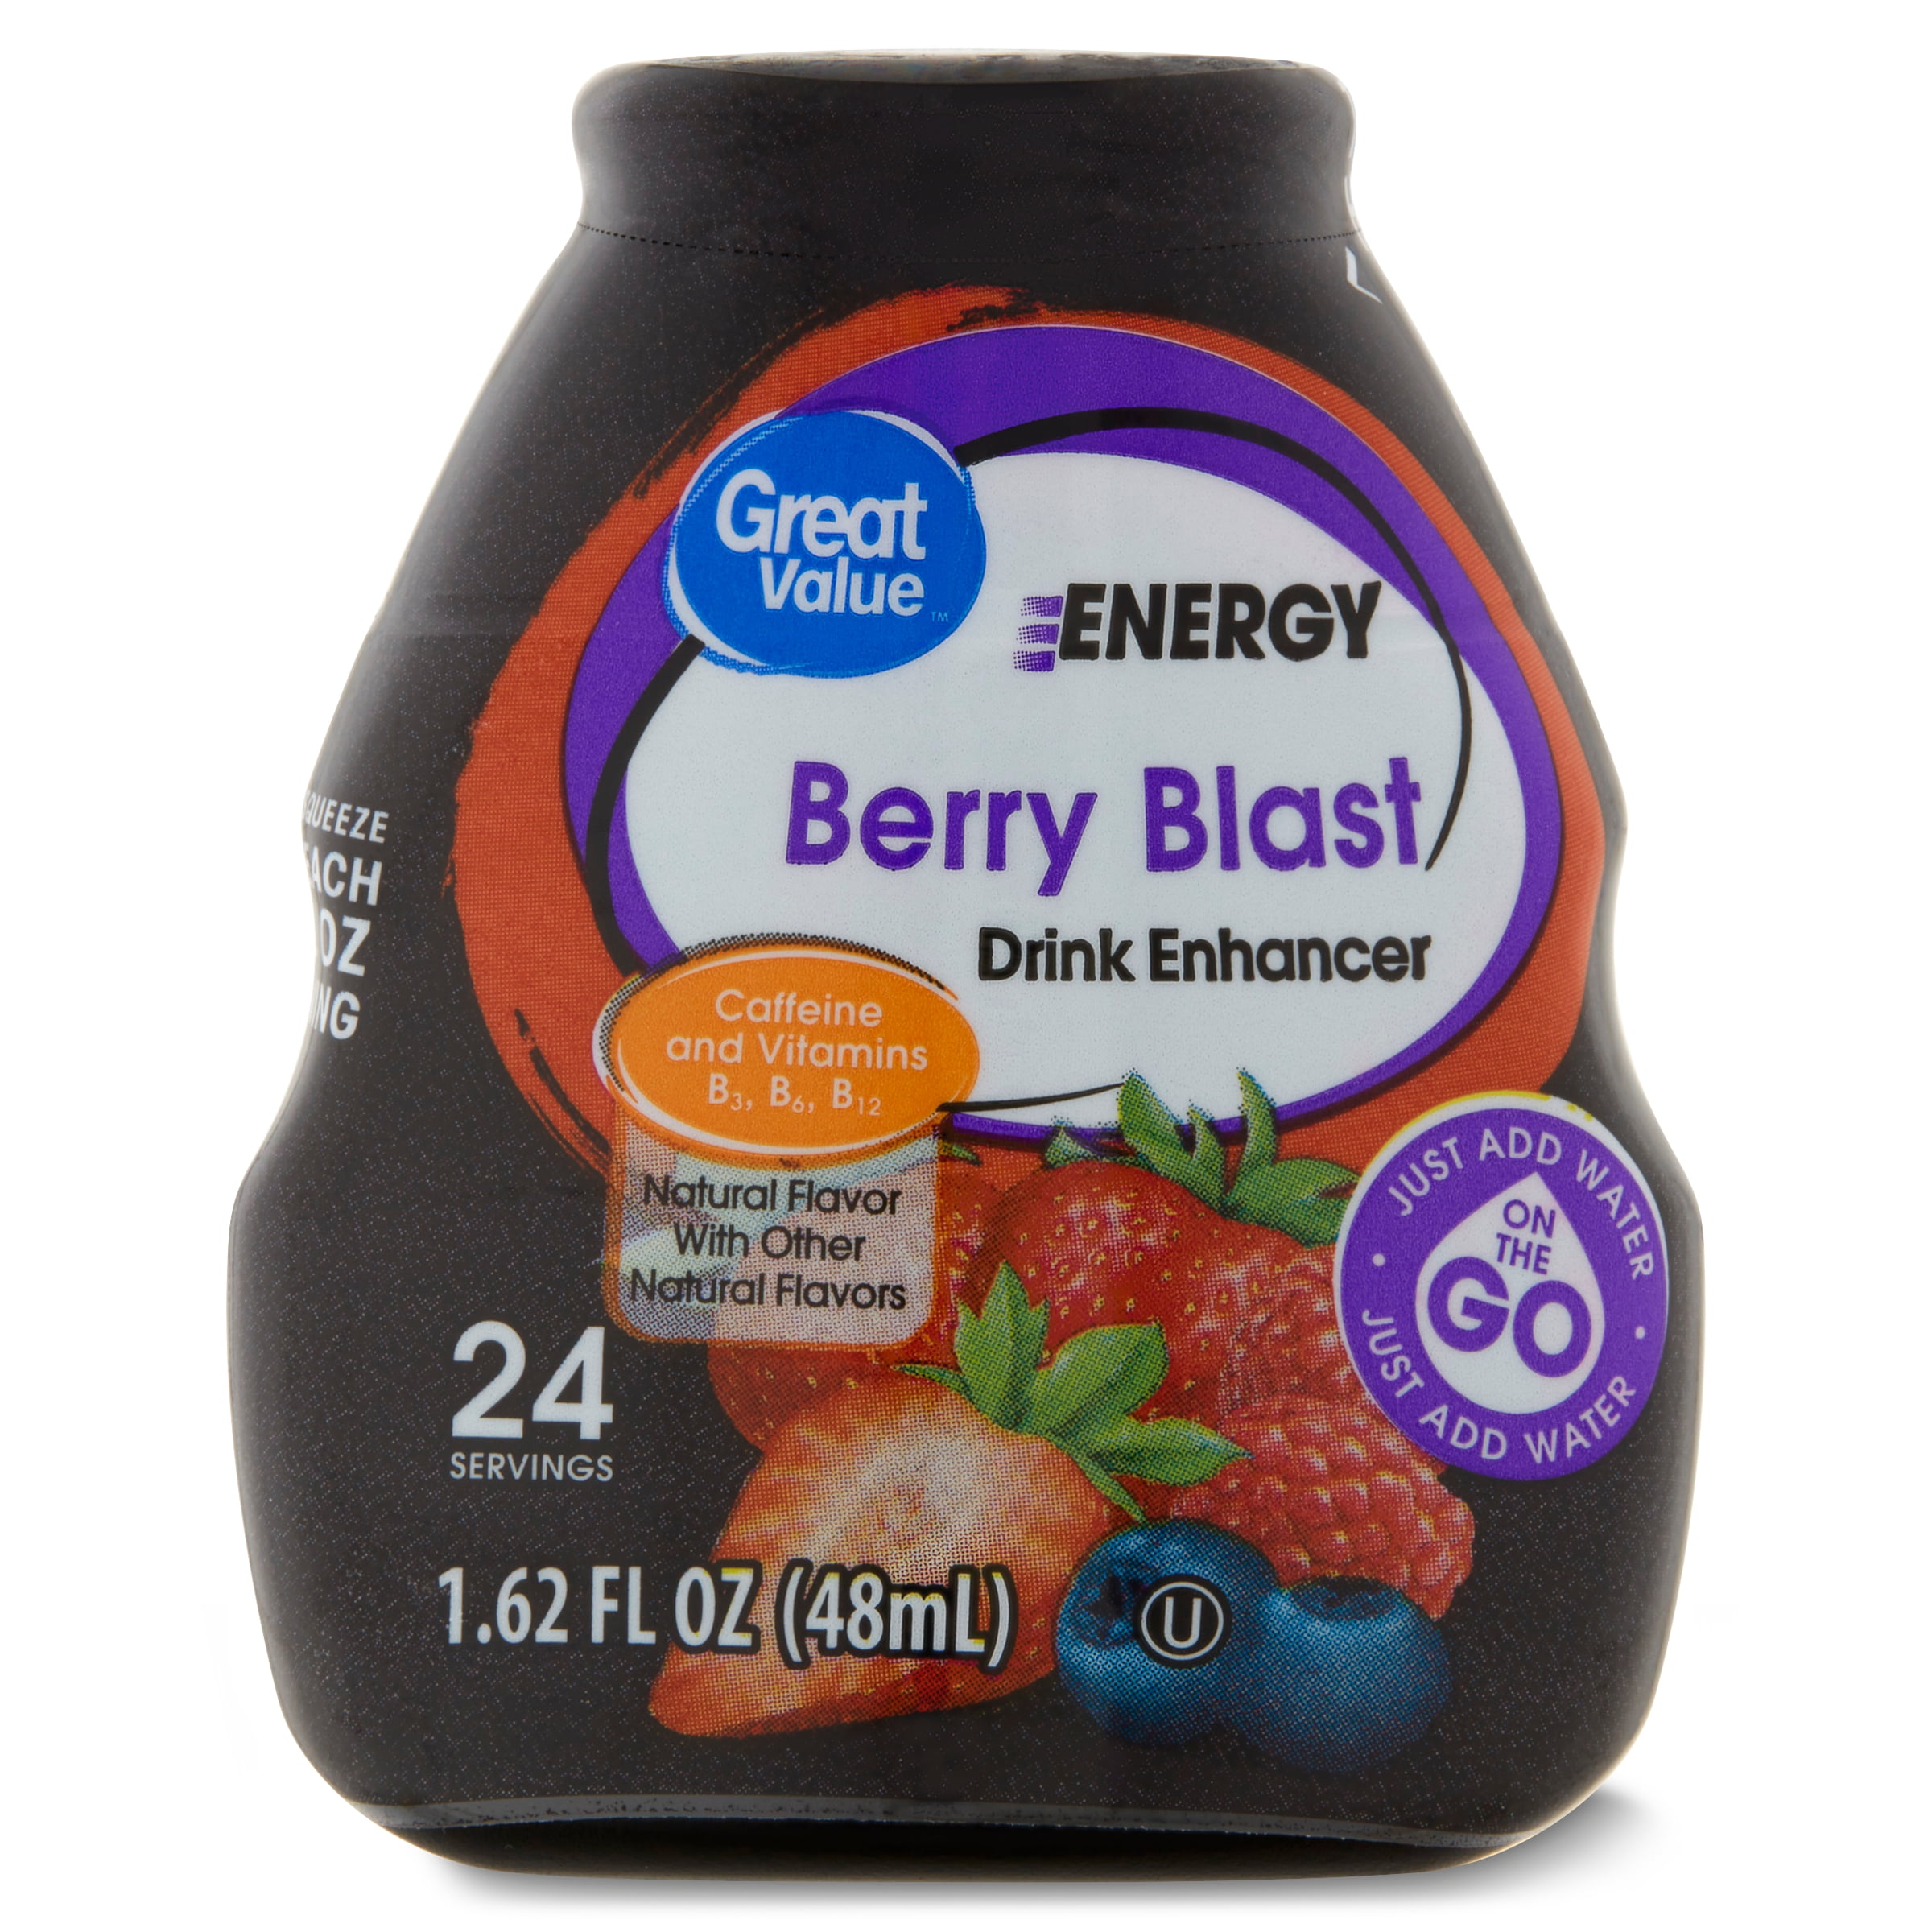 Great Value Energy Berry Blast Drink Enhancer, 1.62 Fl Oz